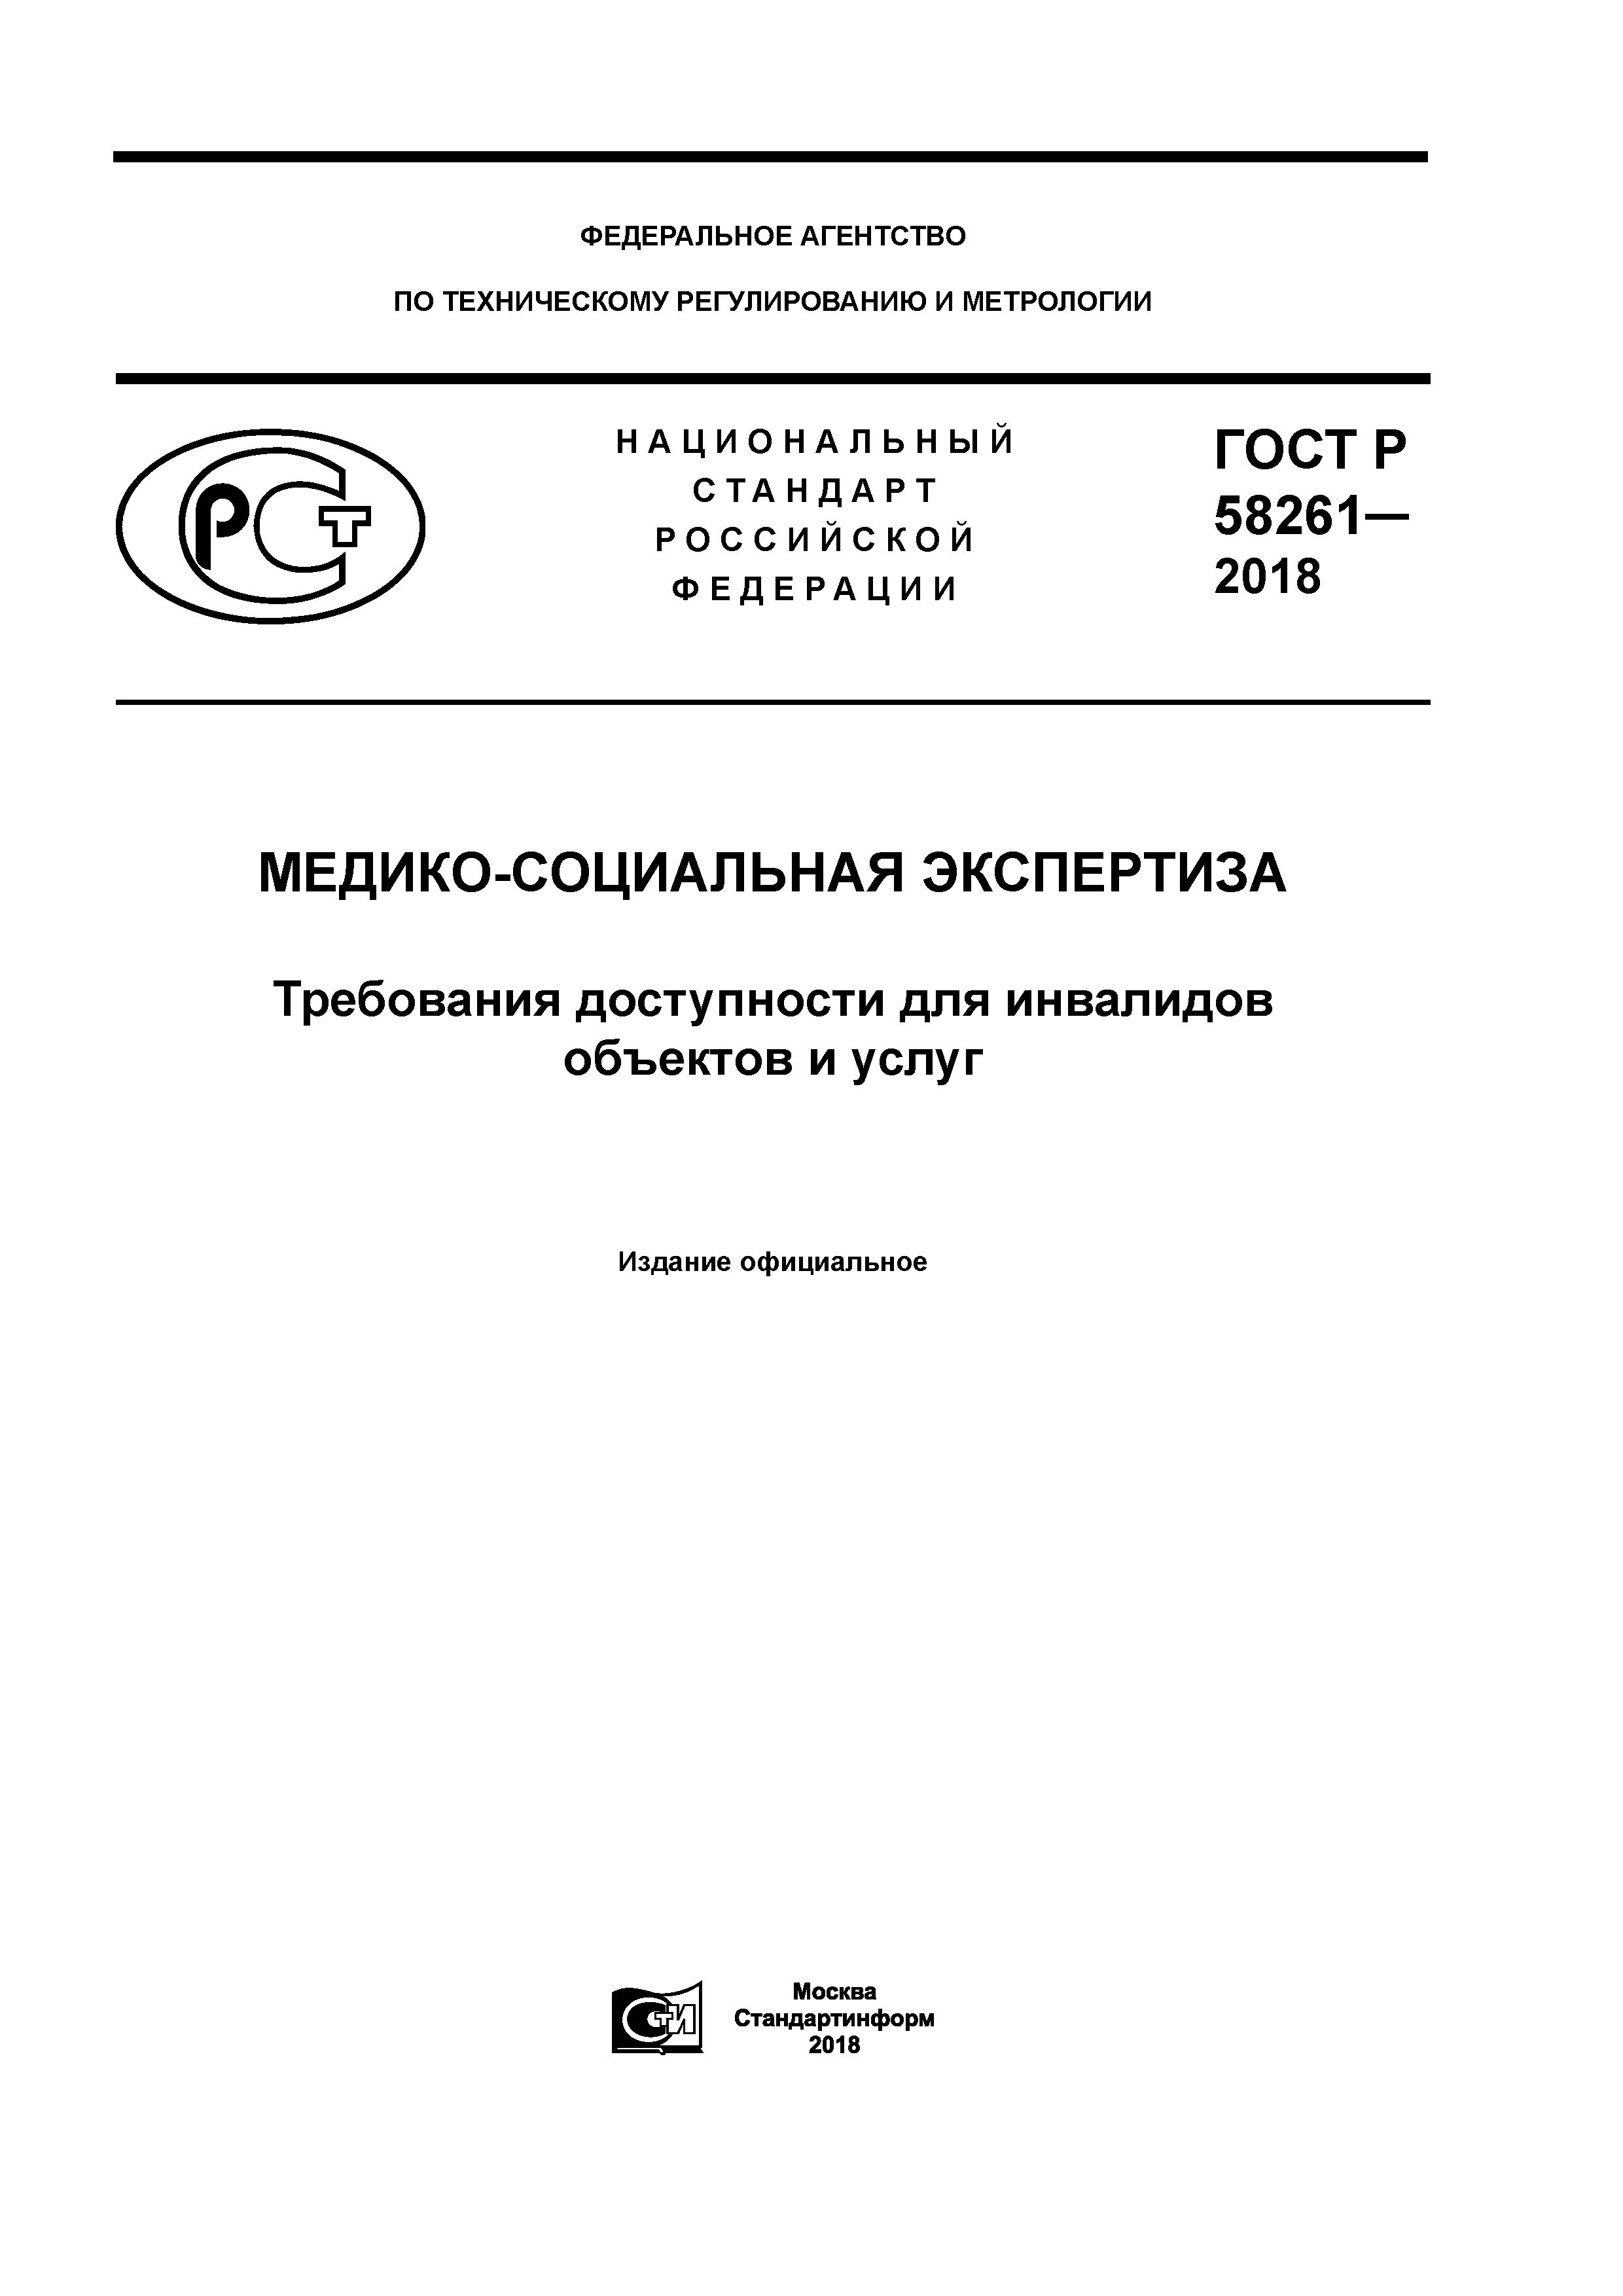 ГОСТ Р 58261-2018